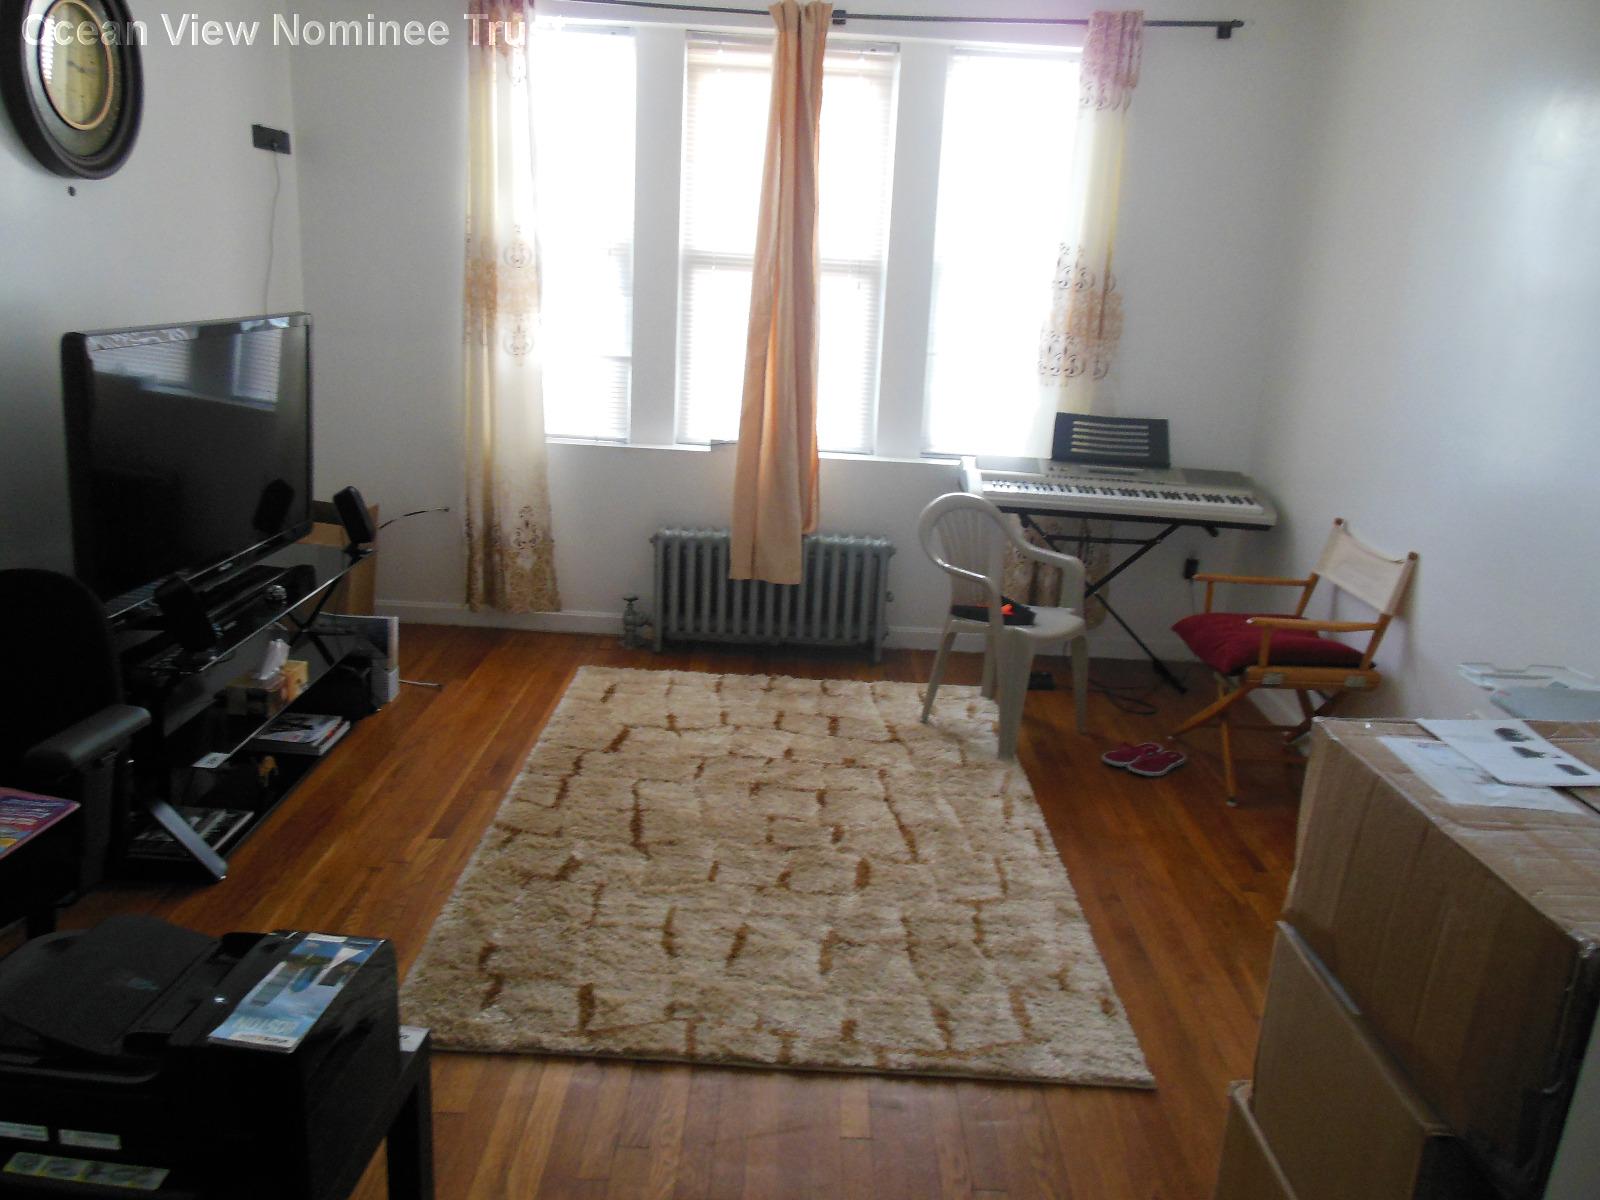 Photos of apartment on Nichols St.,Everett MA 02149